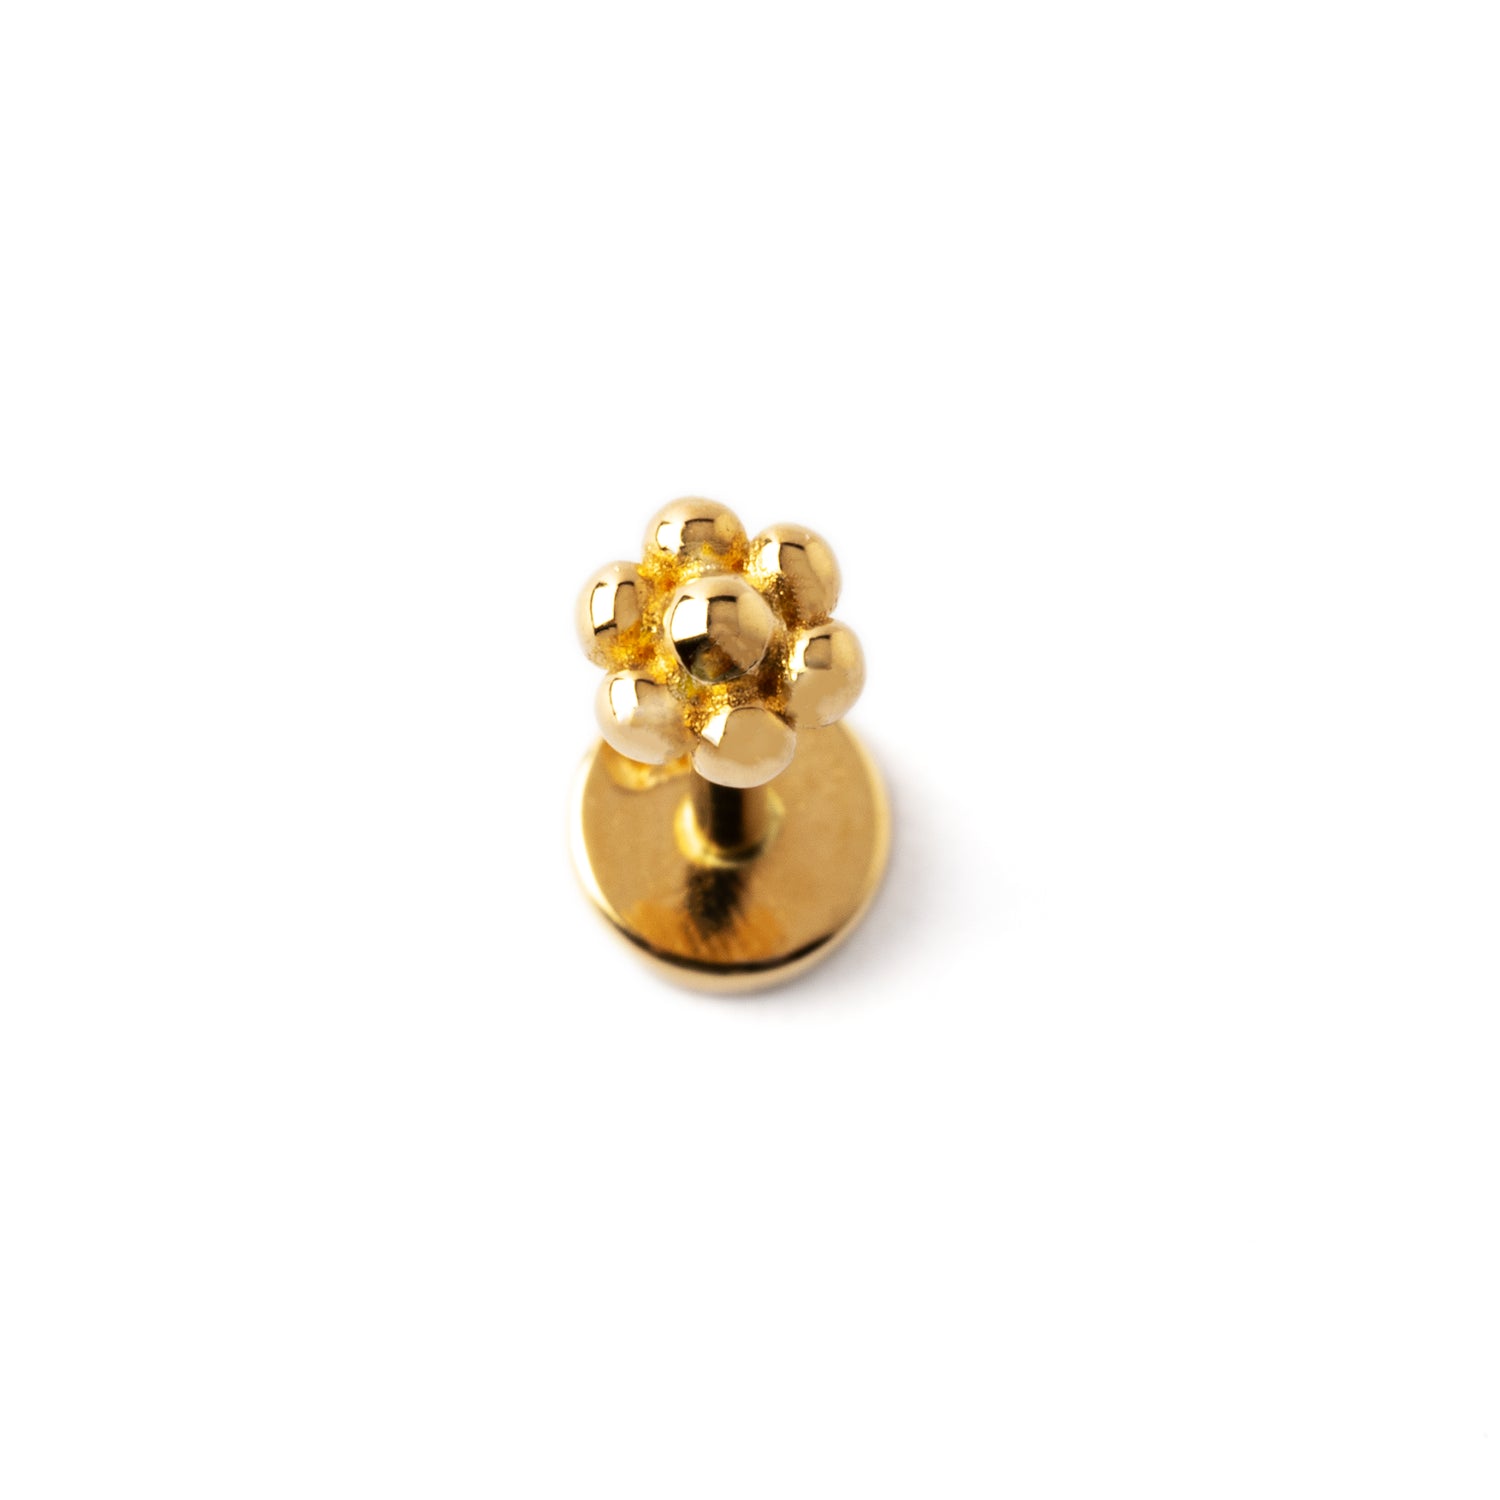 14k Gold internally threaded screw back earring 1.2mm (16g), 8mm, dots flower labret stud frontal view